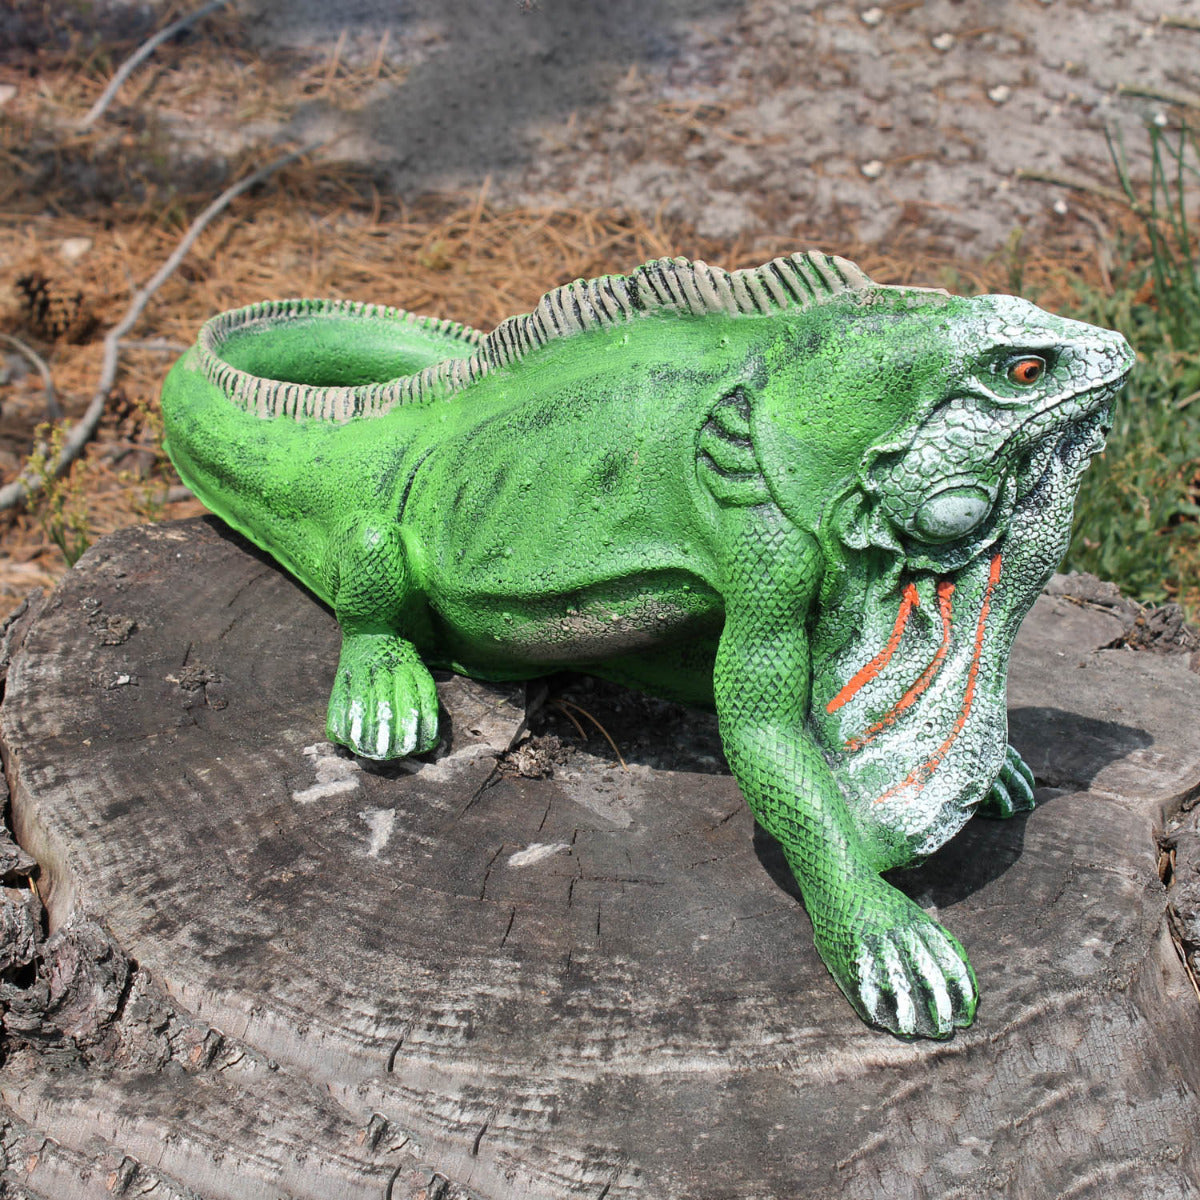 Dekofigur Tierfigur Leguan 52 cm grün Echse Reptilien Gartenfigur exotische Dekoration lebensecht